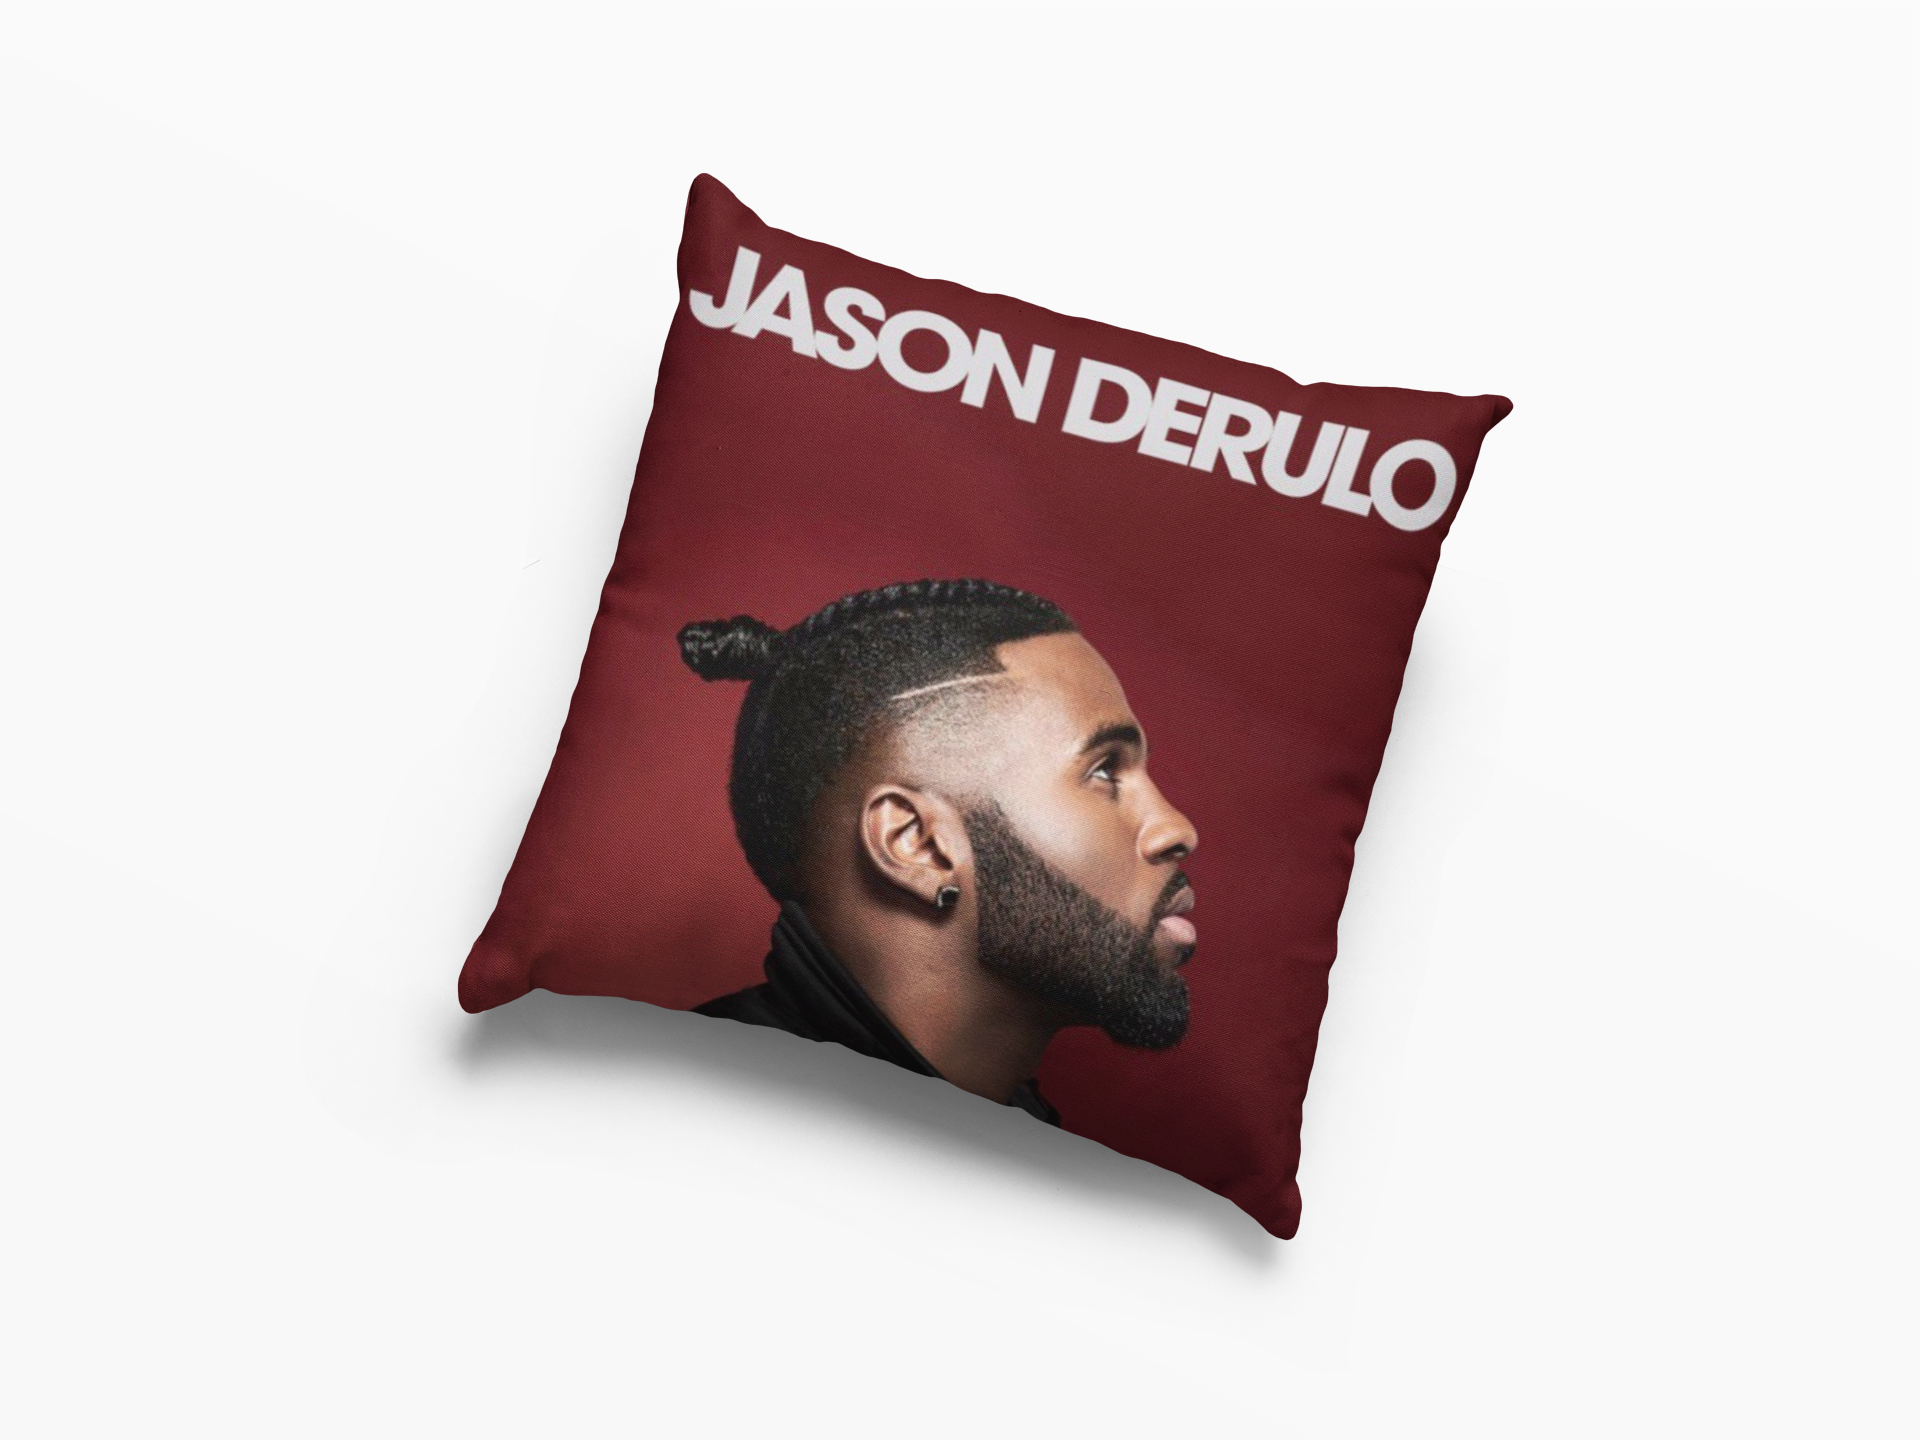 Jason Derulo Cushion Case / Pillow Case